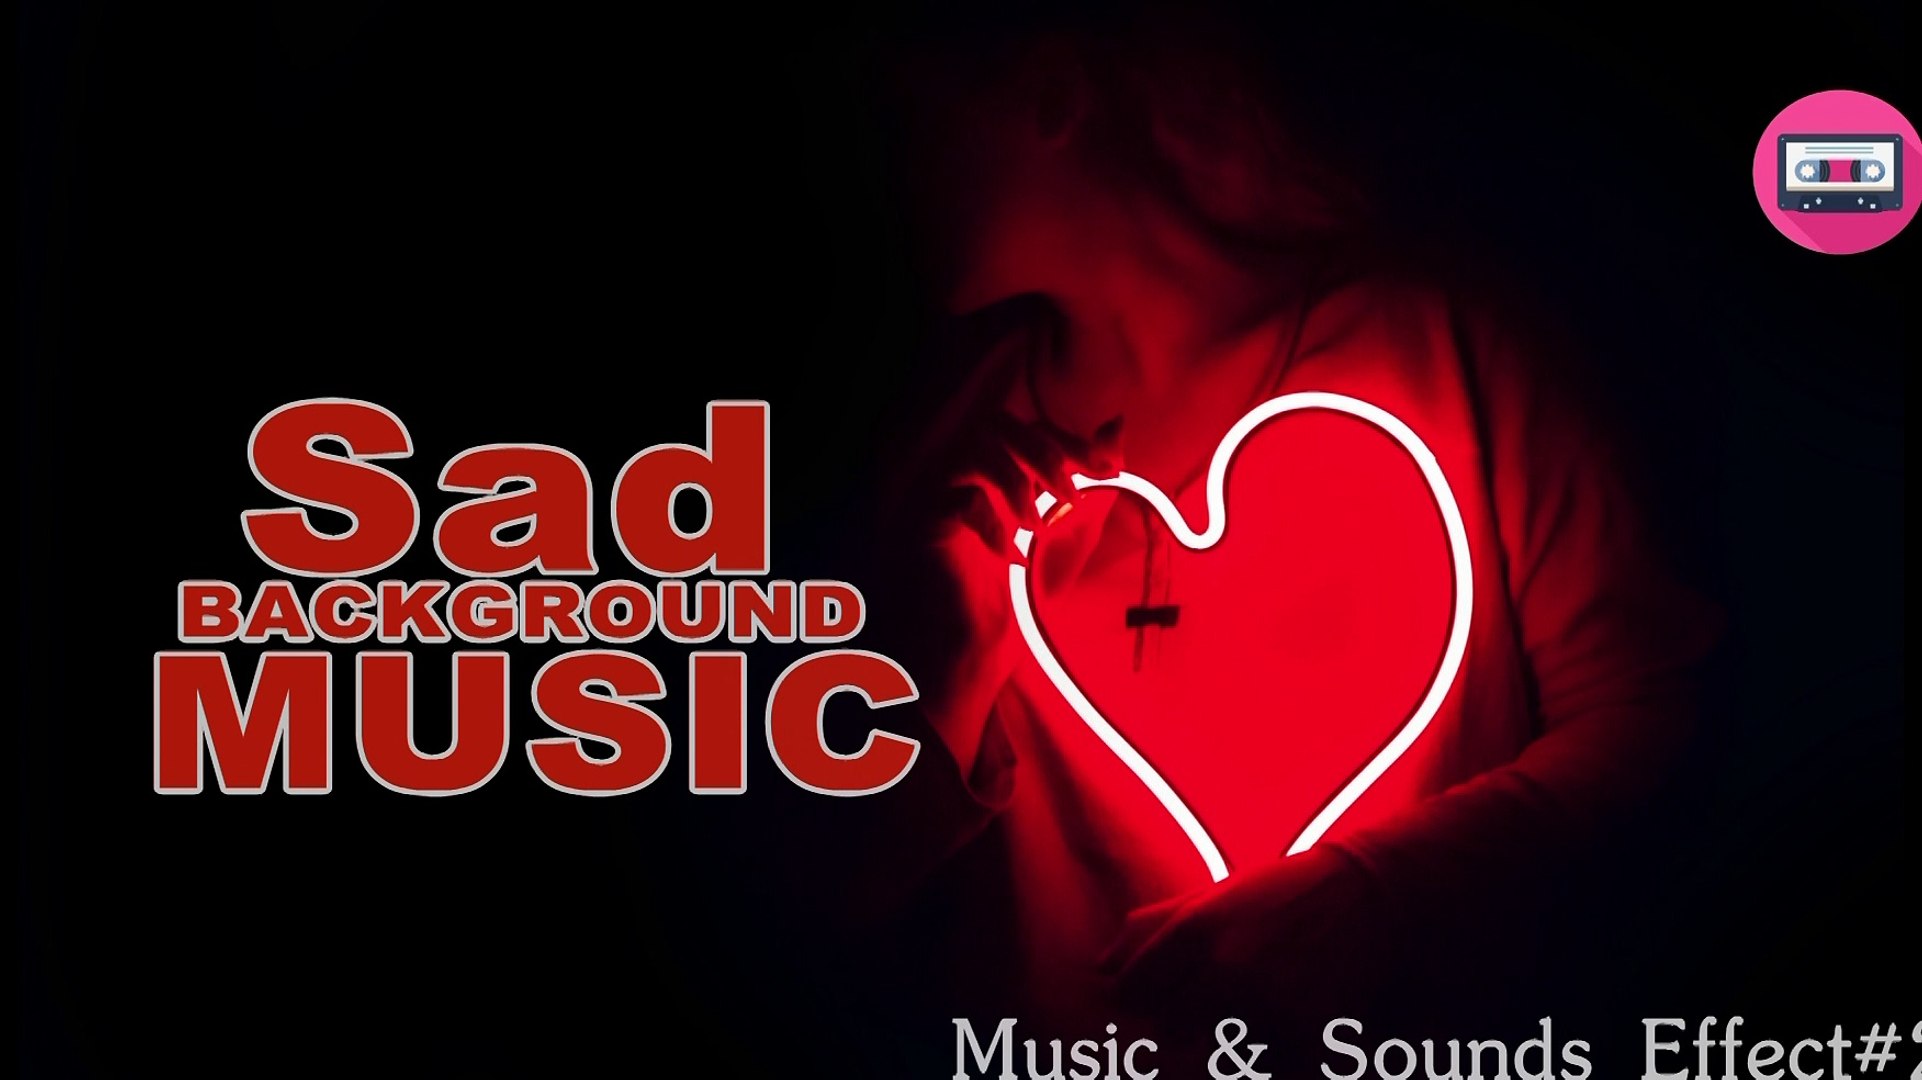 Sad BACKGROUND Music 1 Cinematic No Copyright Background Music For Youtube Videos | Copyright Free M